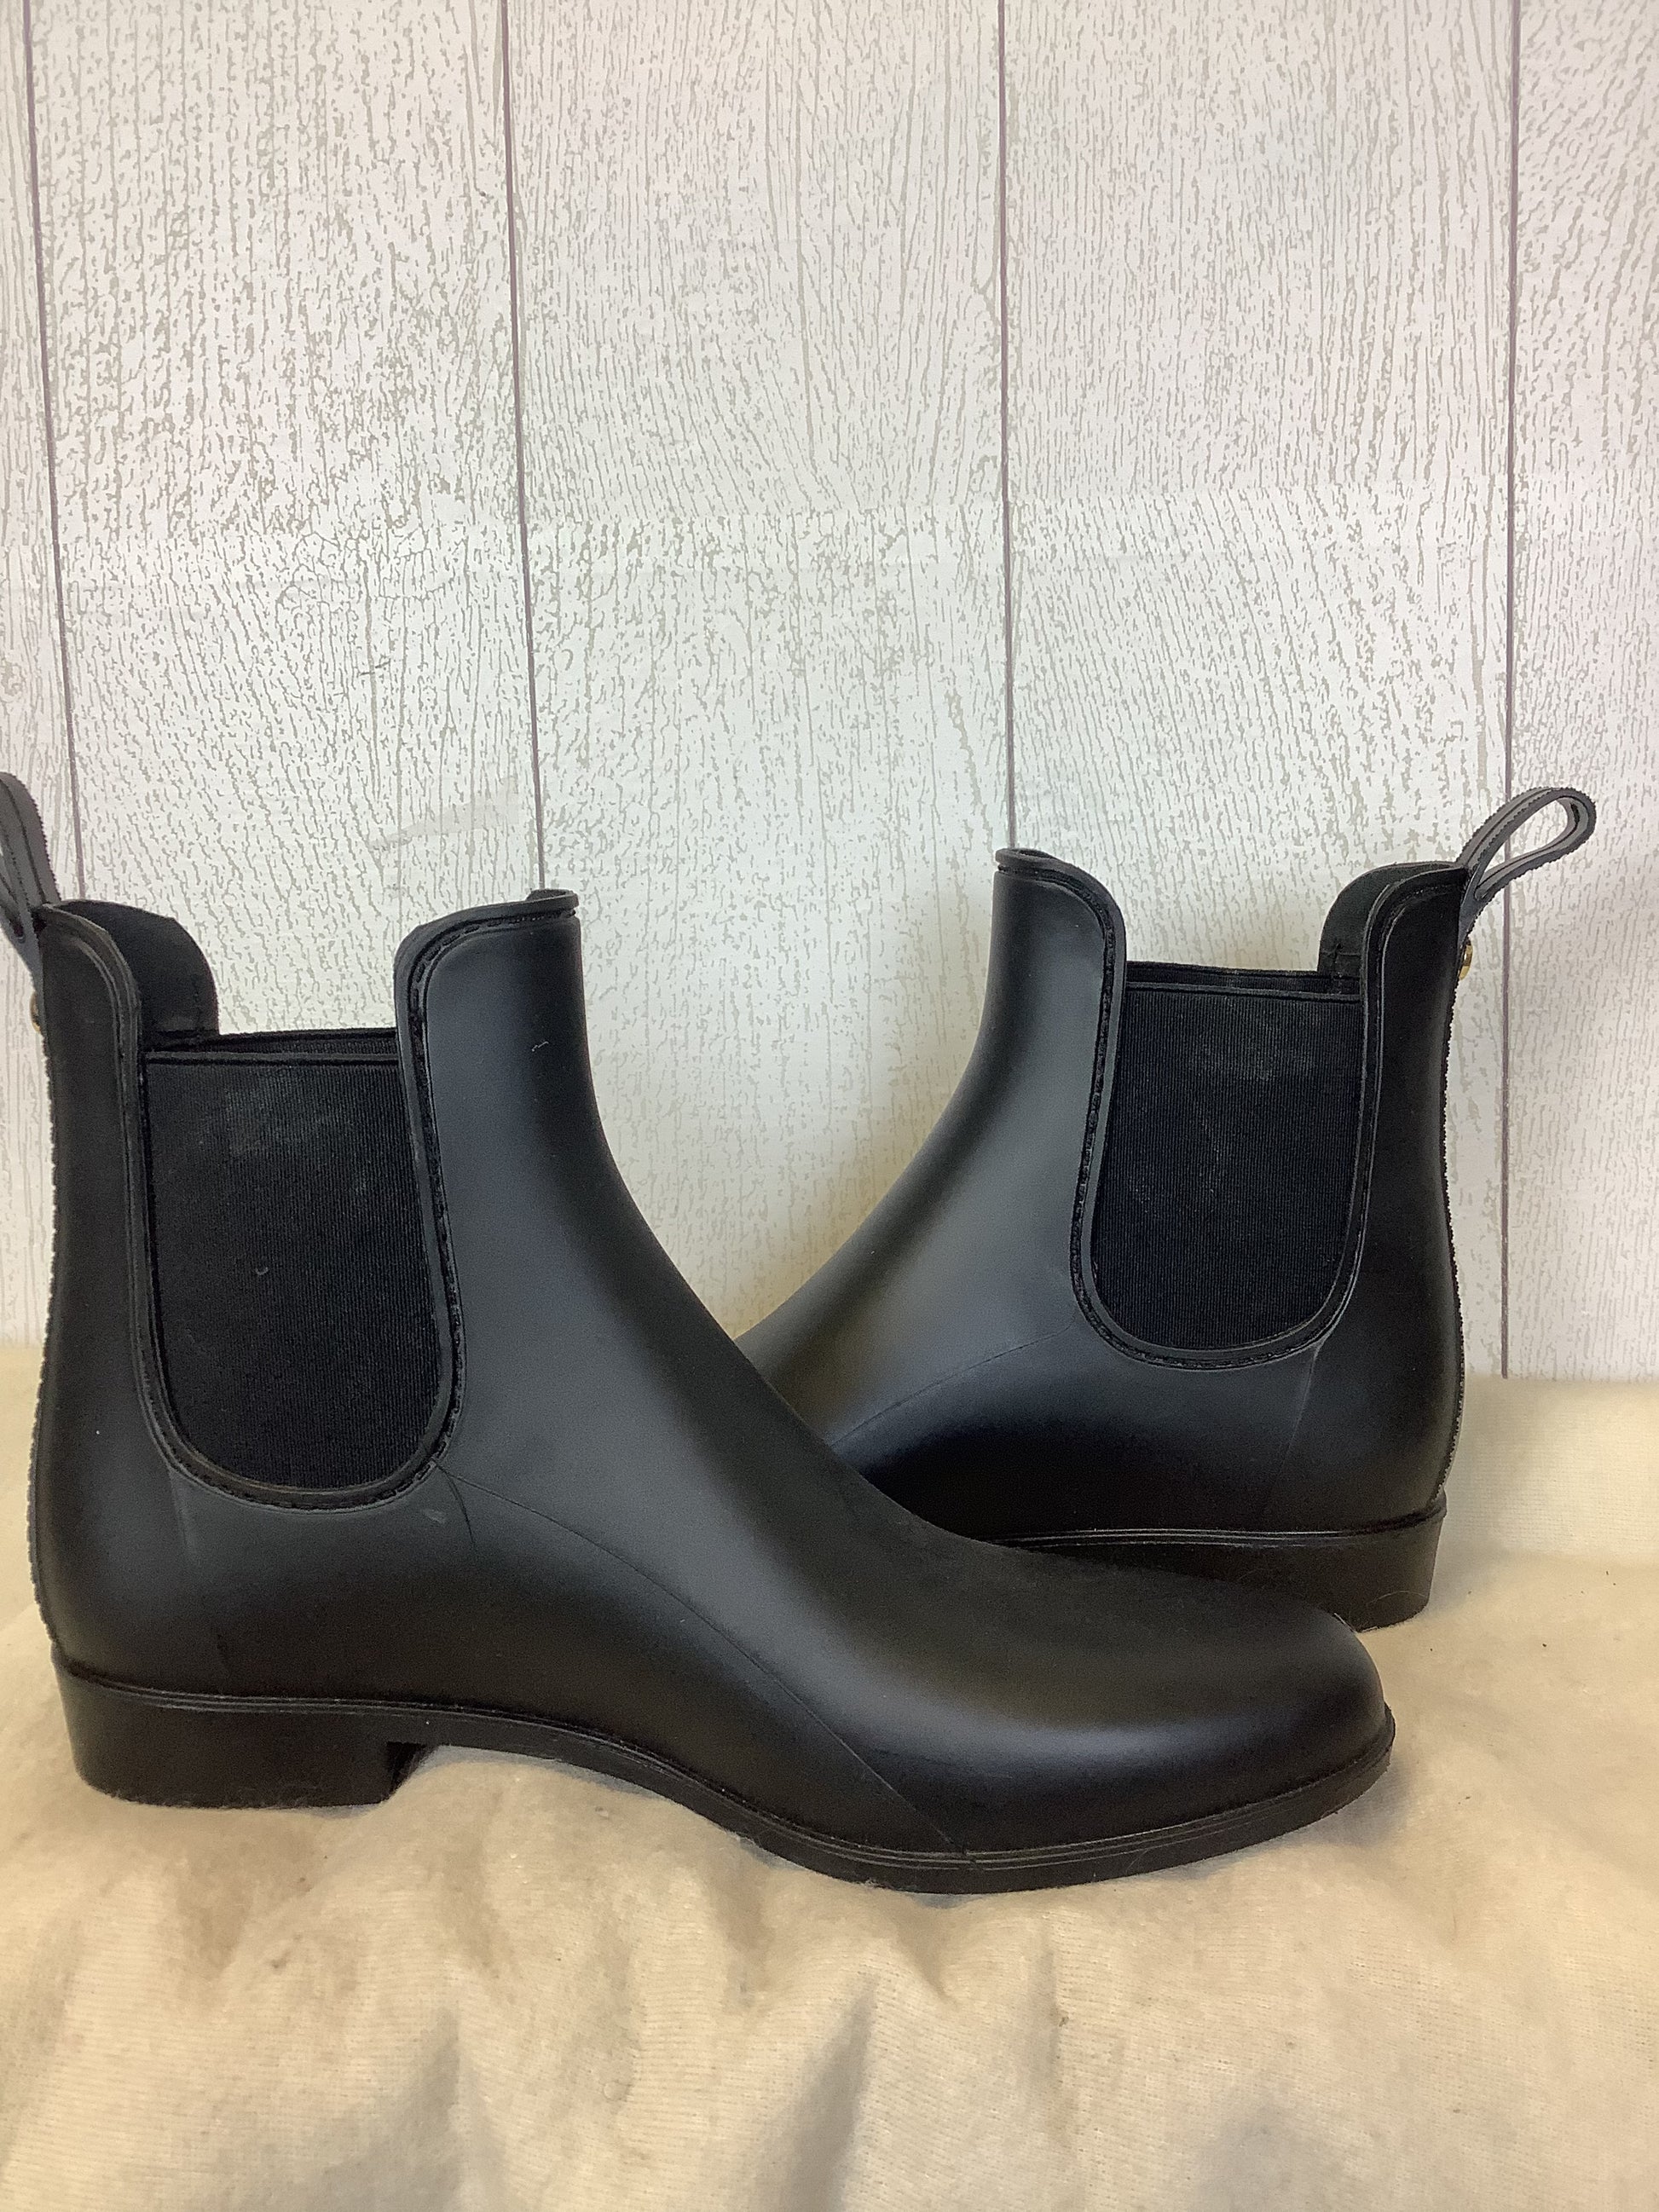 Boots Ankle By Sam Edelman Size: – Clothes Mentor Spartanburg SC #210